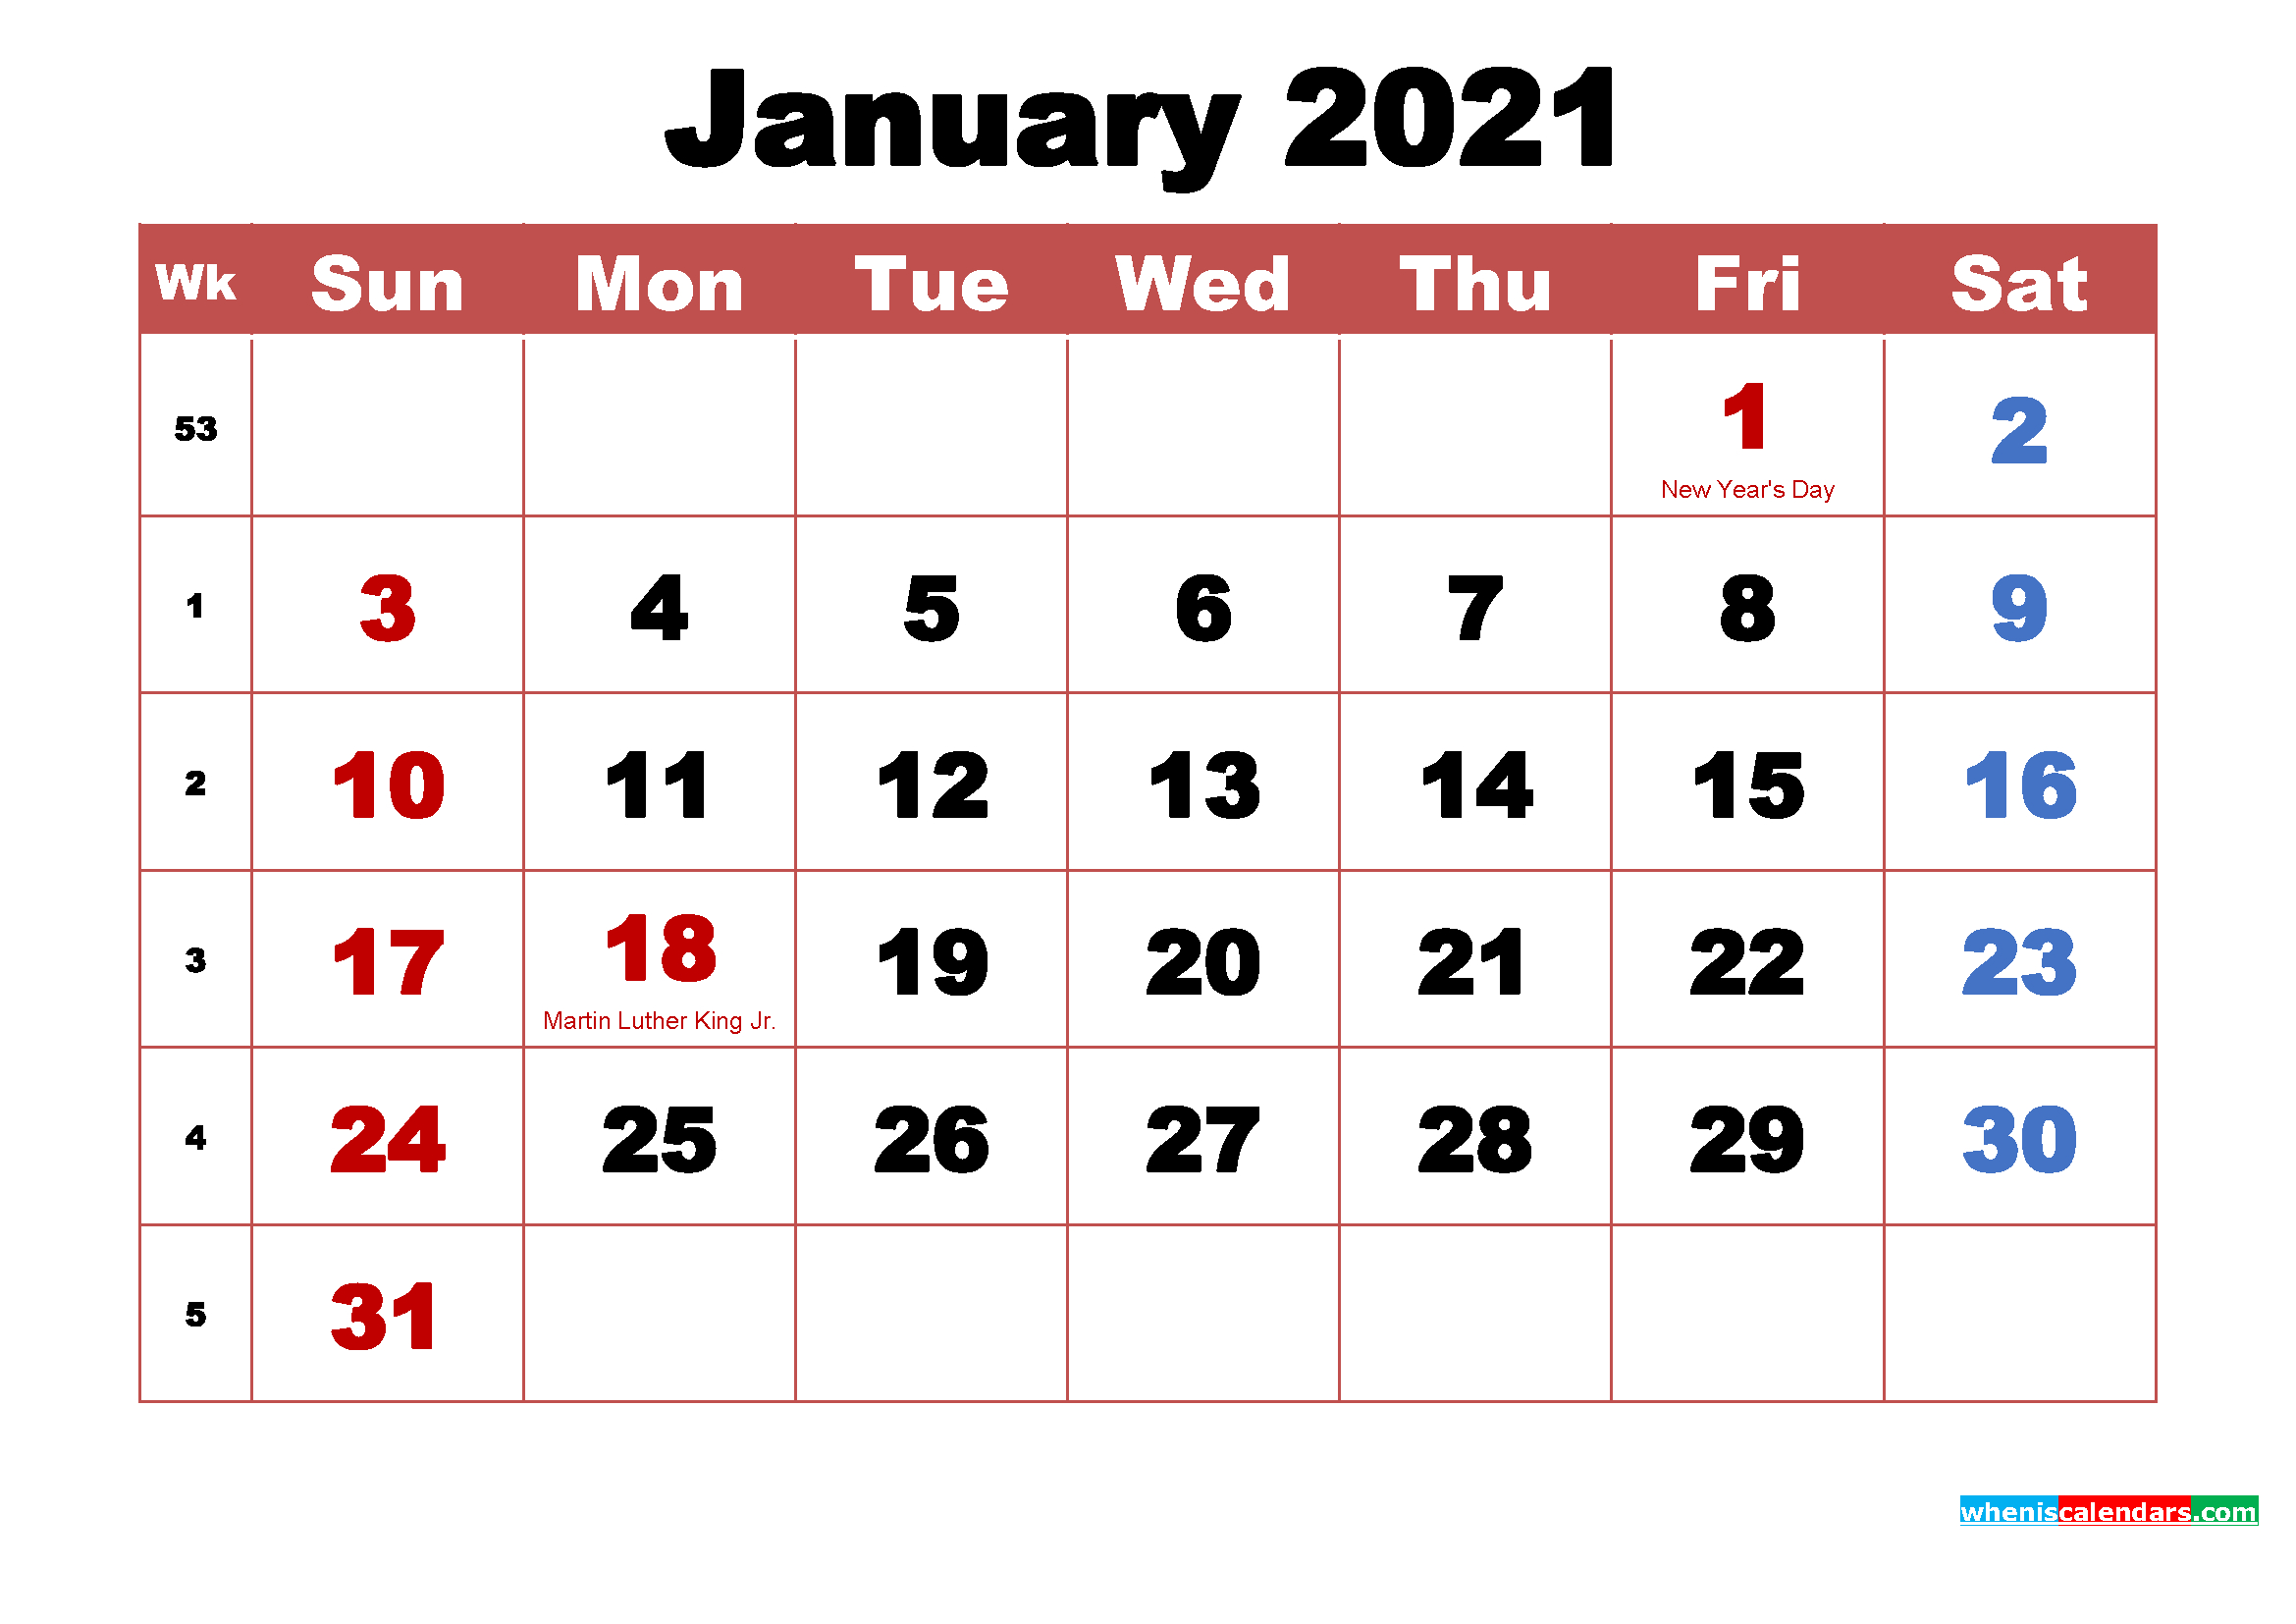 January 2021 Calendar With Holidays Printable - Free  January Holidays